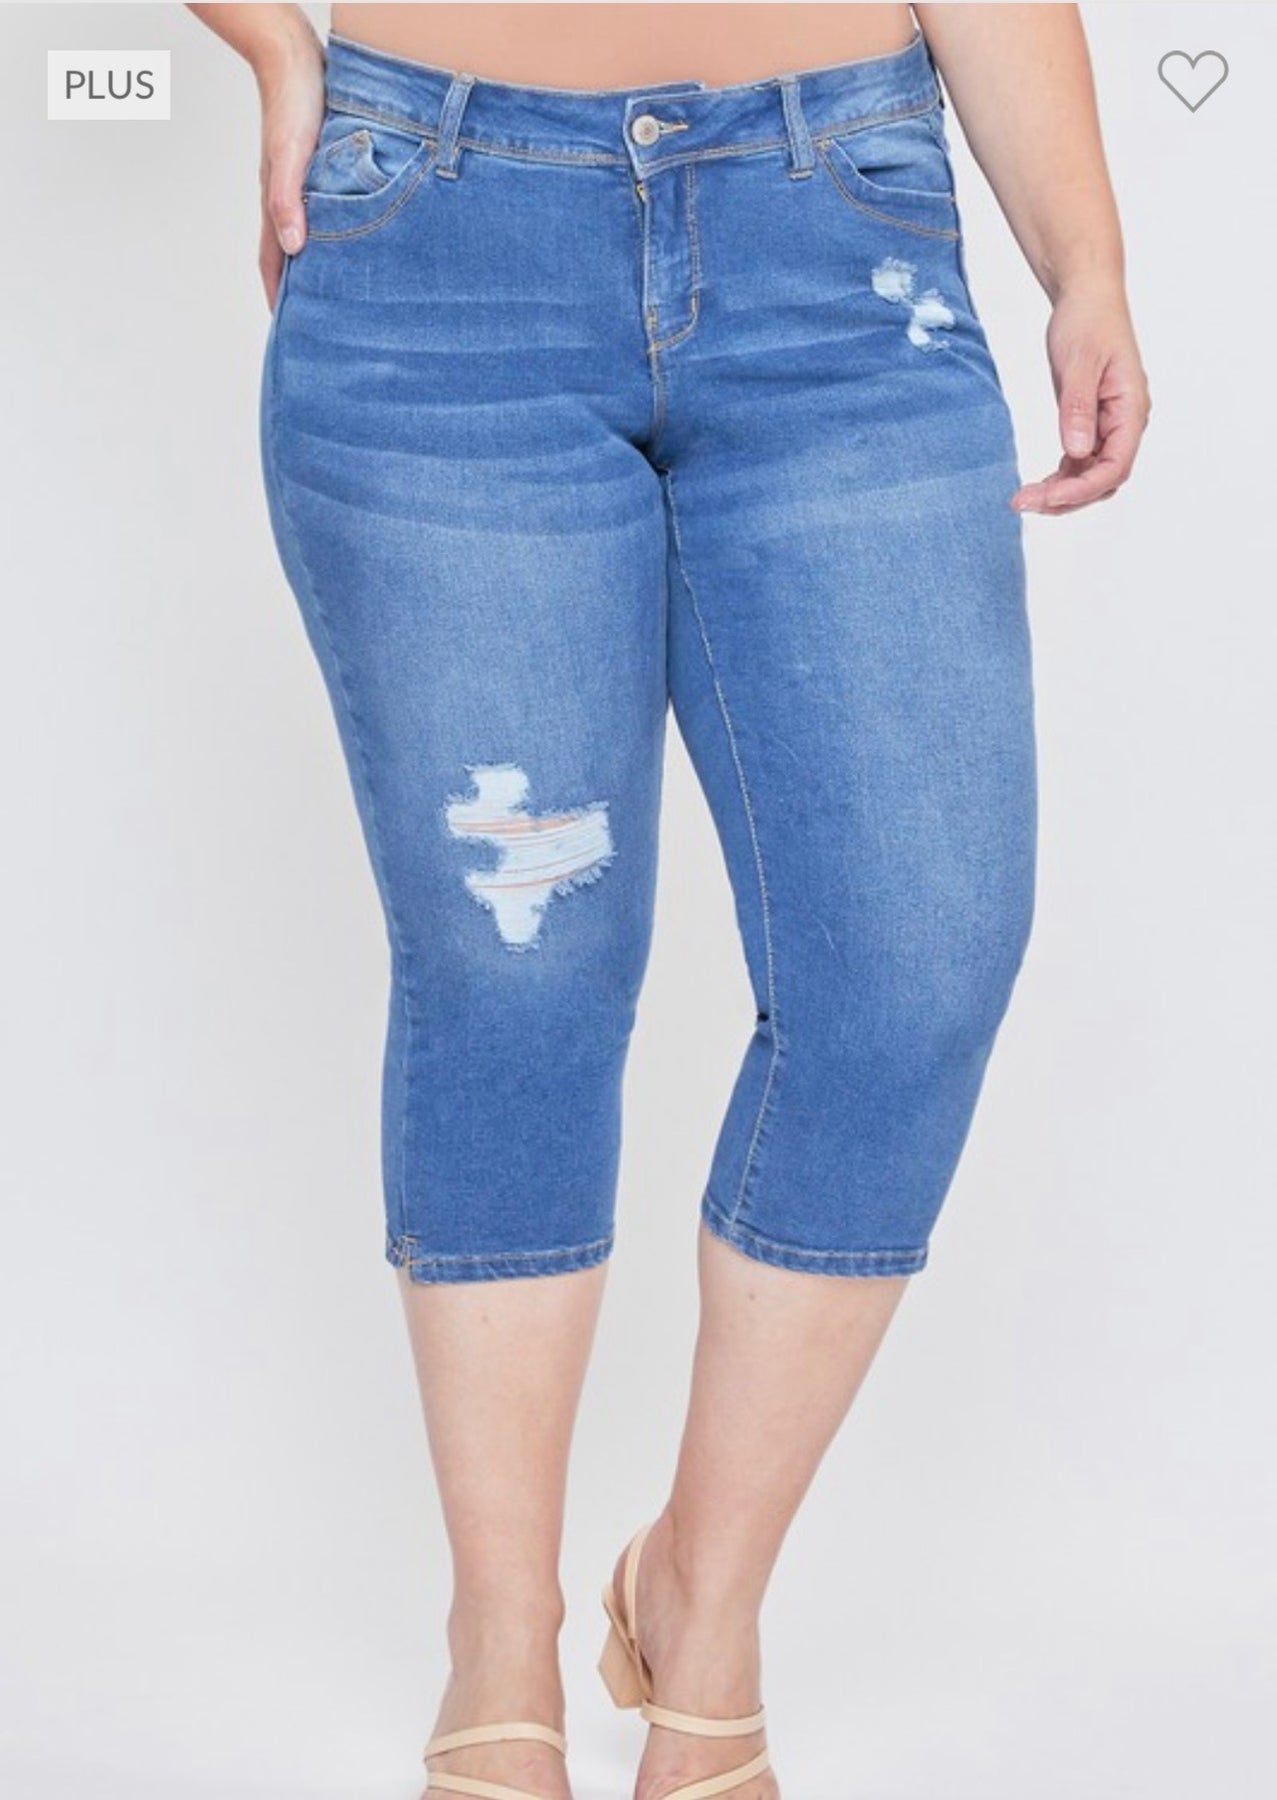 Ripped Capri Jeans - Inseam 20” 🛒Shop them at madepants.com #capris  #madepants #caprijeans